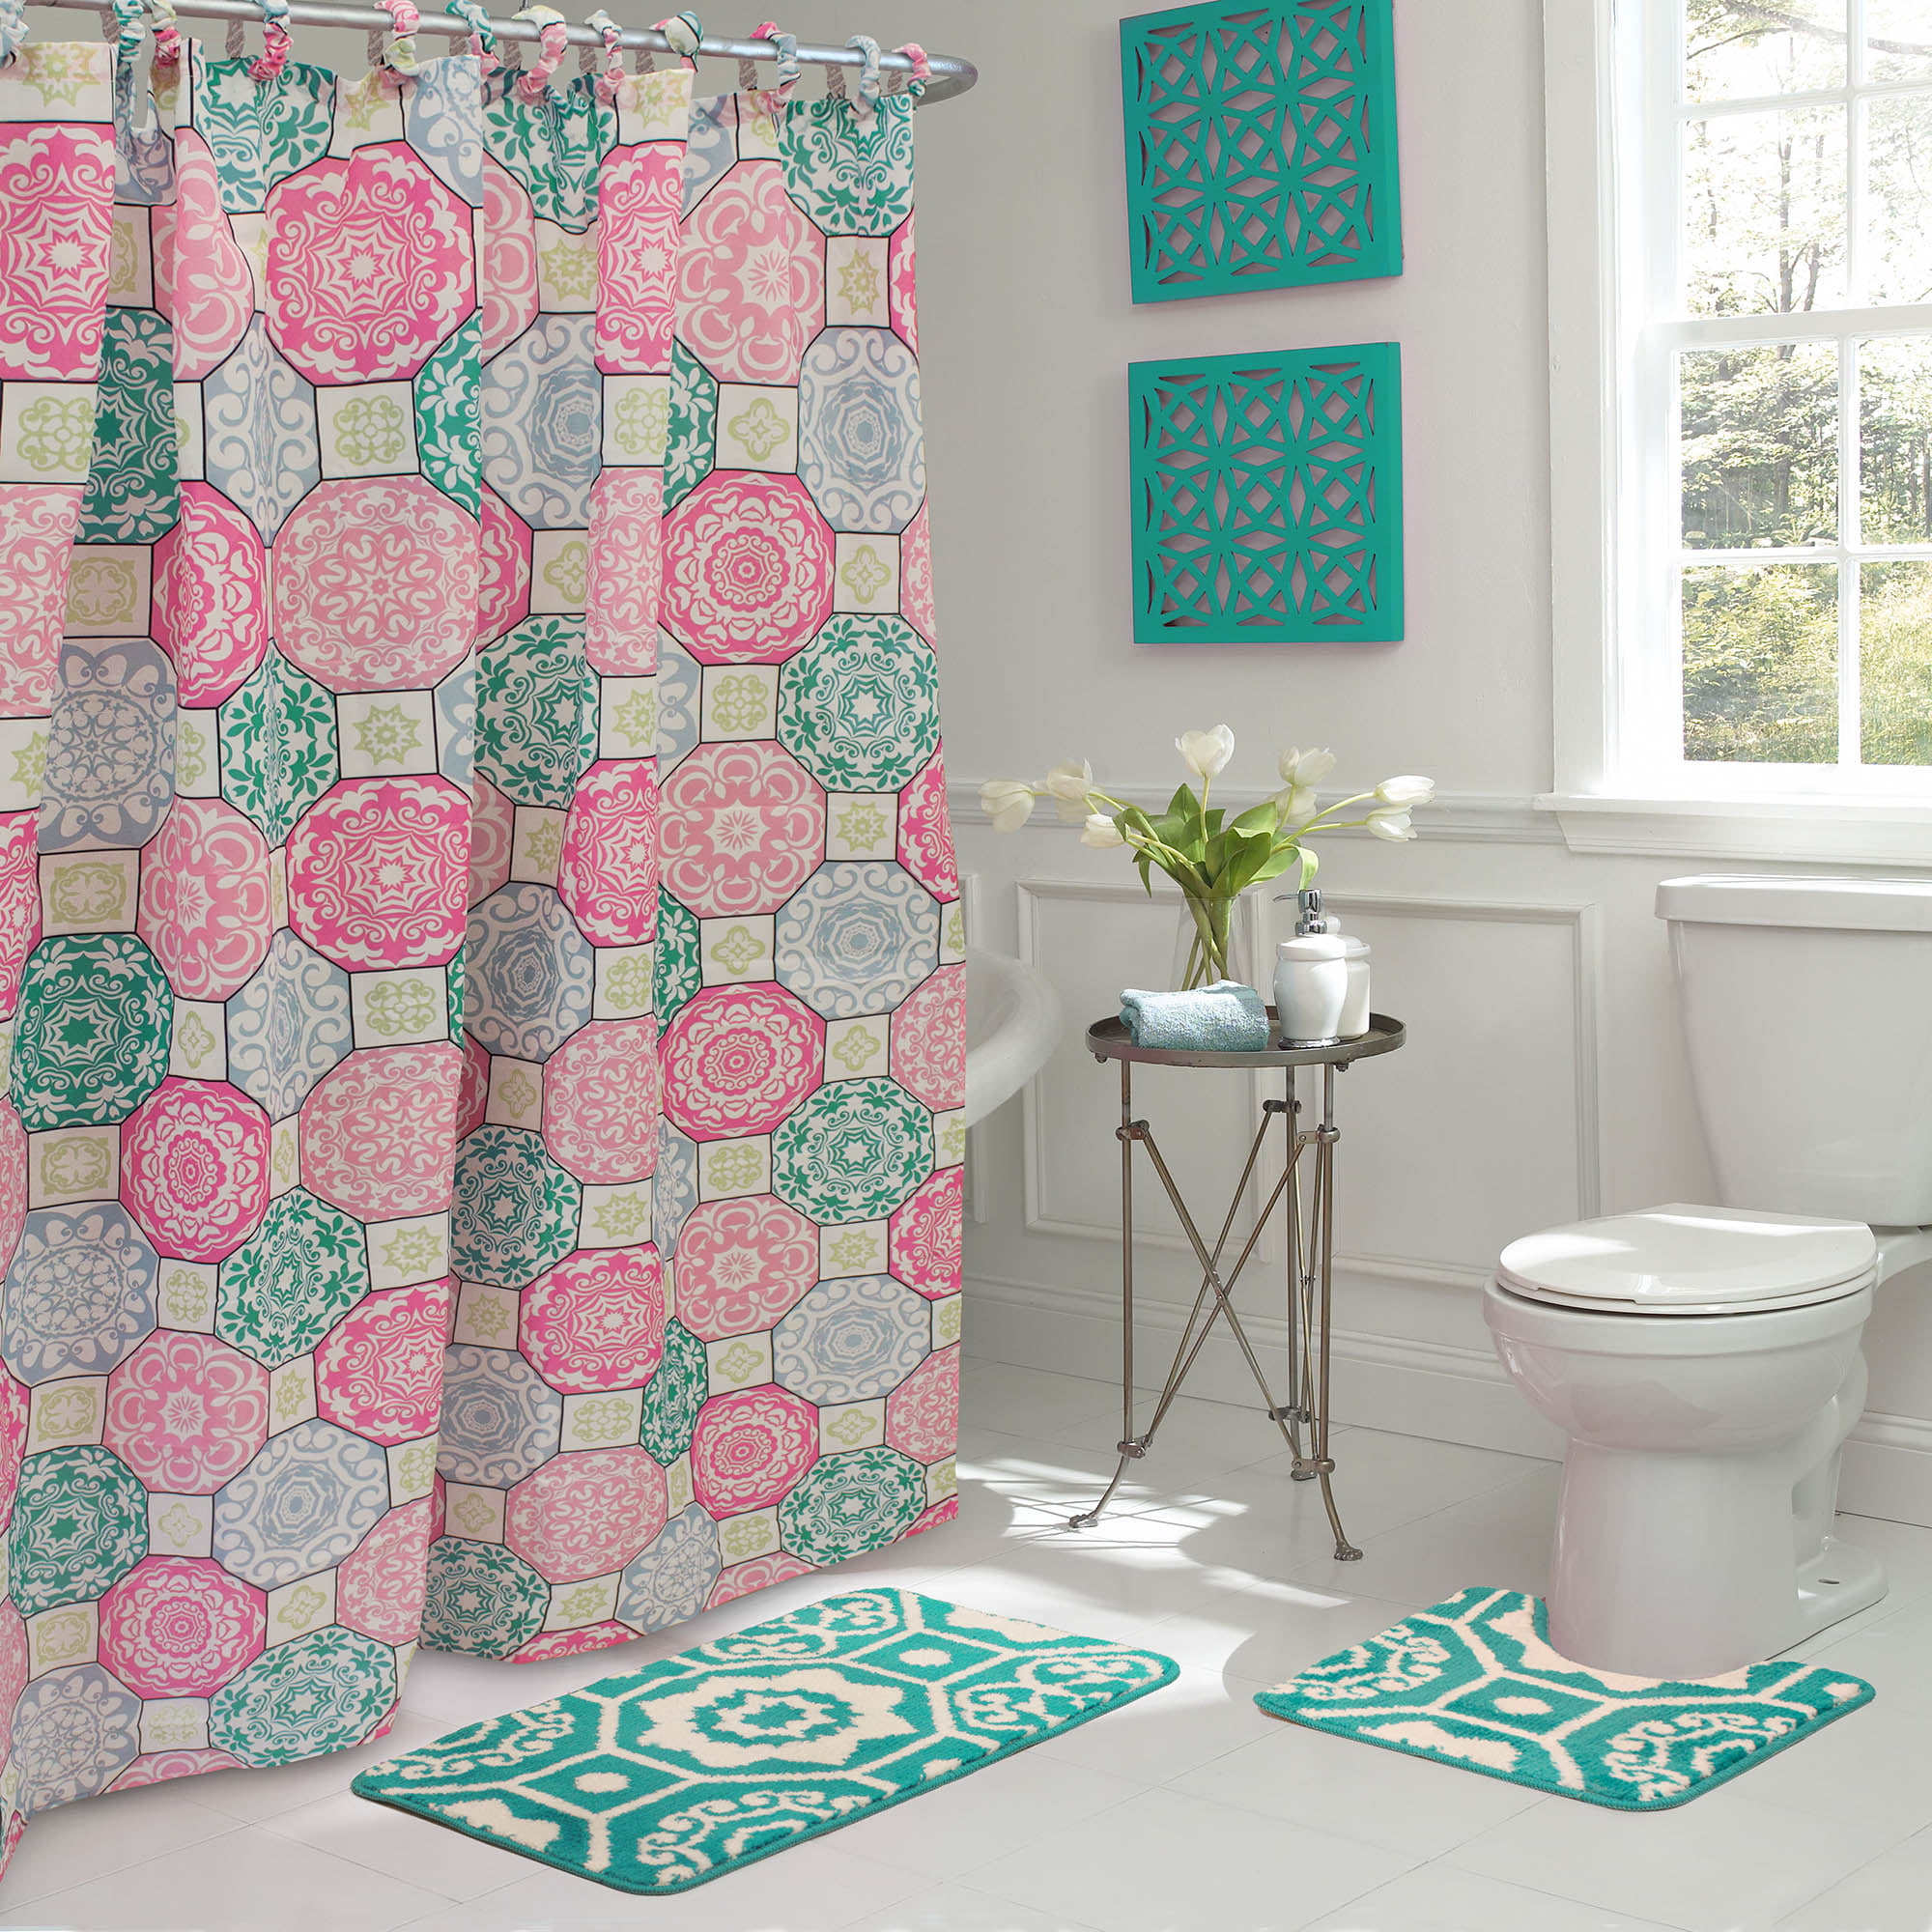 Details about   71"x71" King Print Bathroom Toilet Rug Lid Toilet Cover Mat Shower Curtain Set 